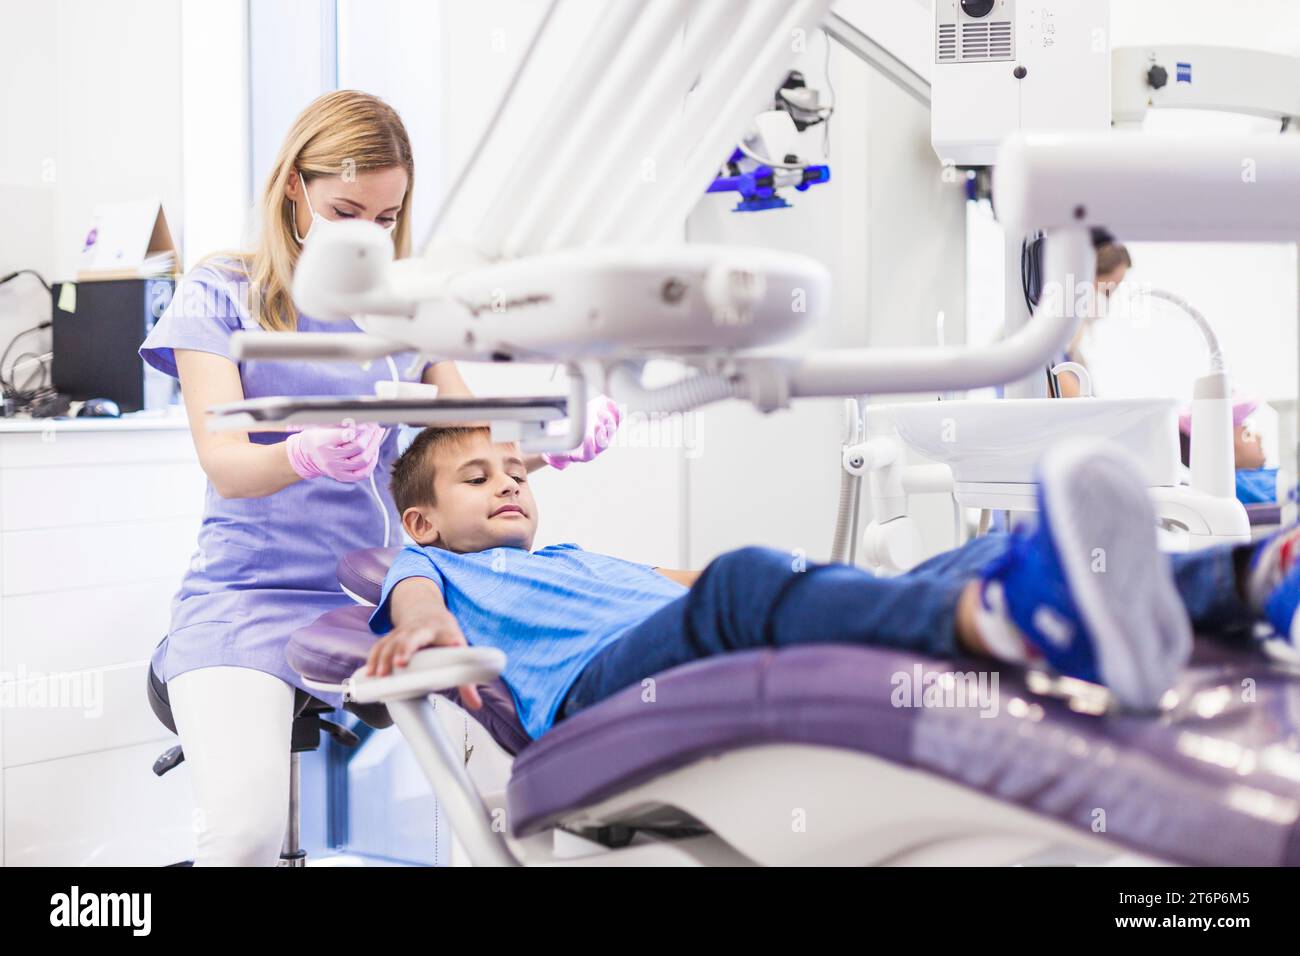 Boy leaning dental chair getting treatment by female dentist Stock Photo